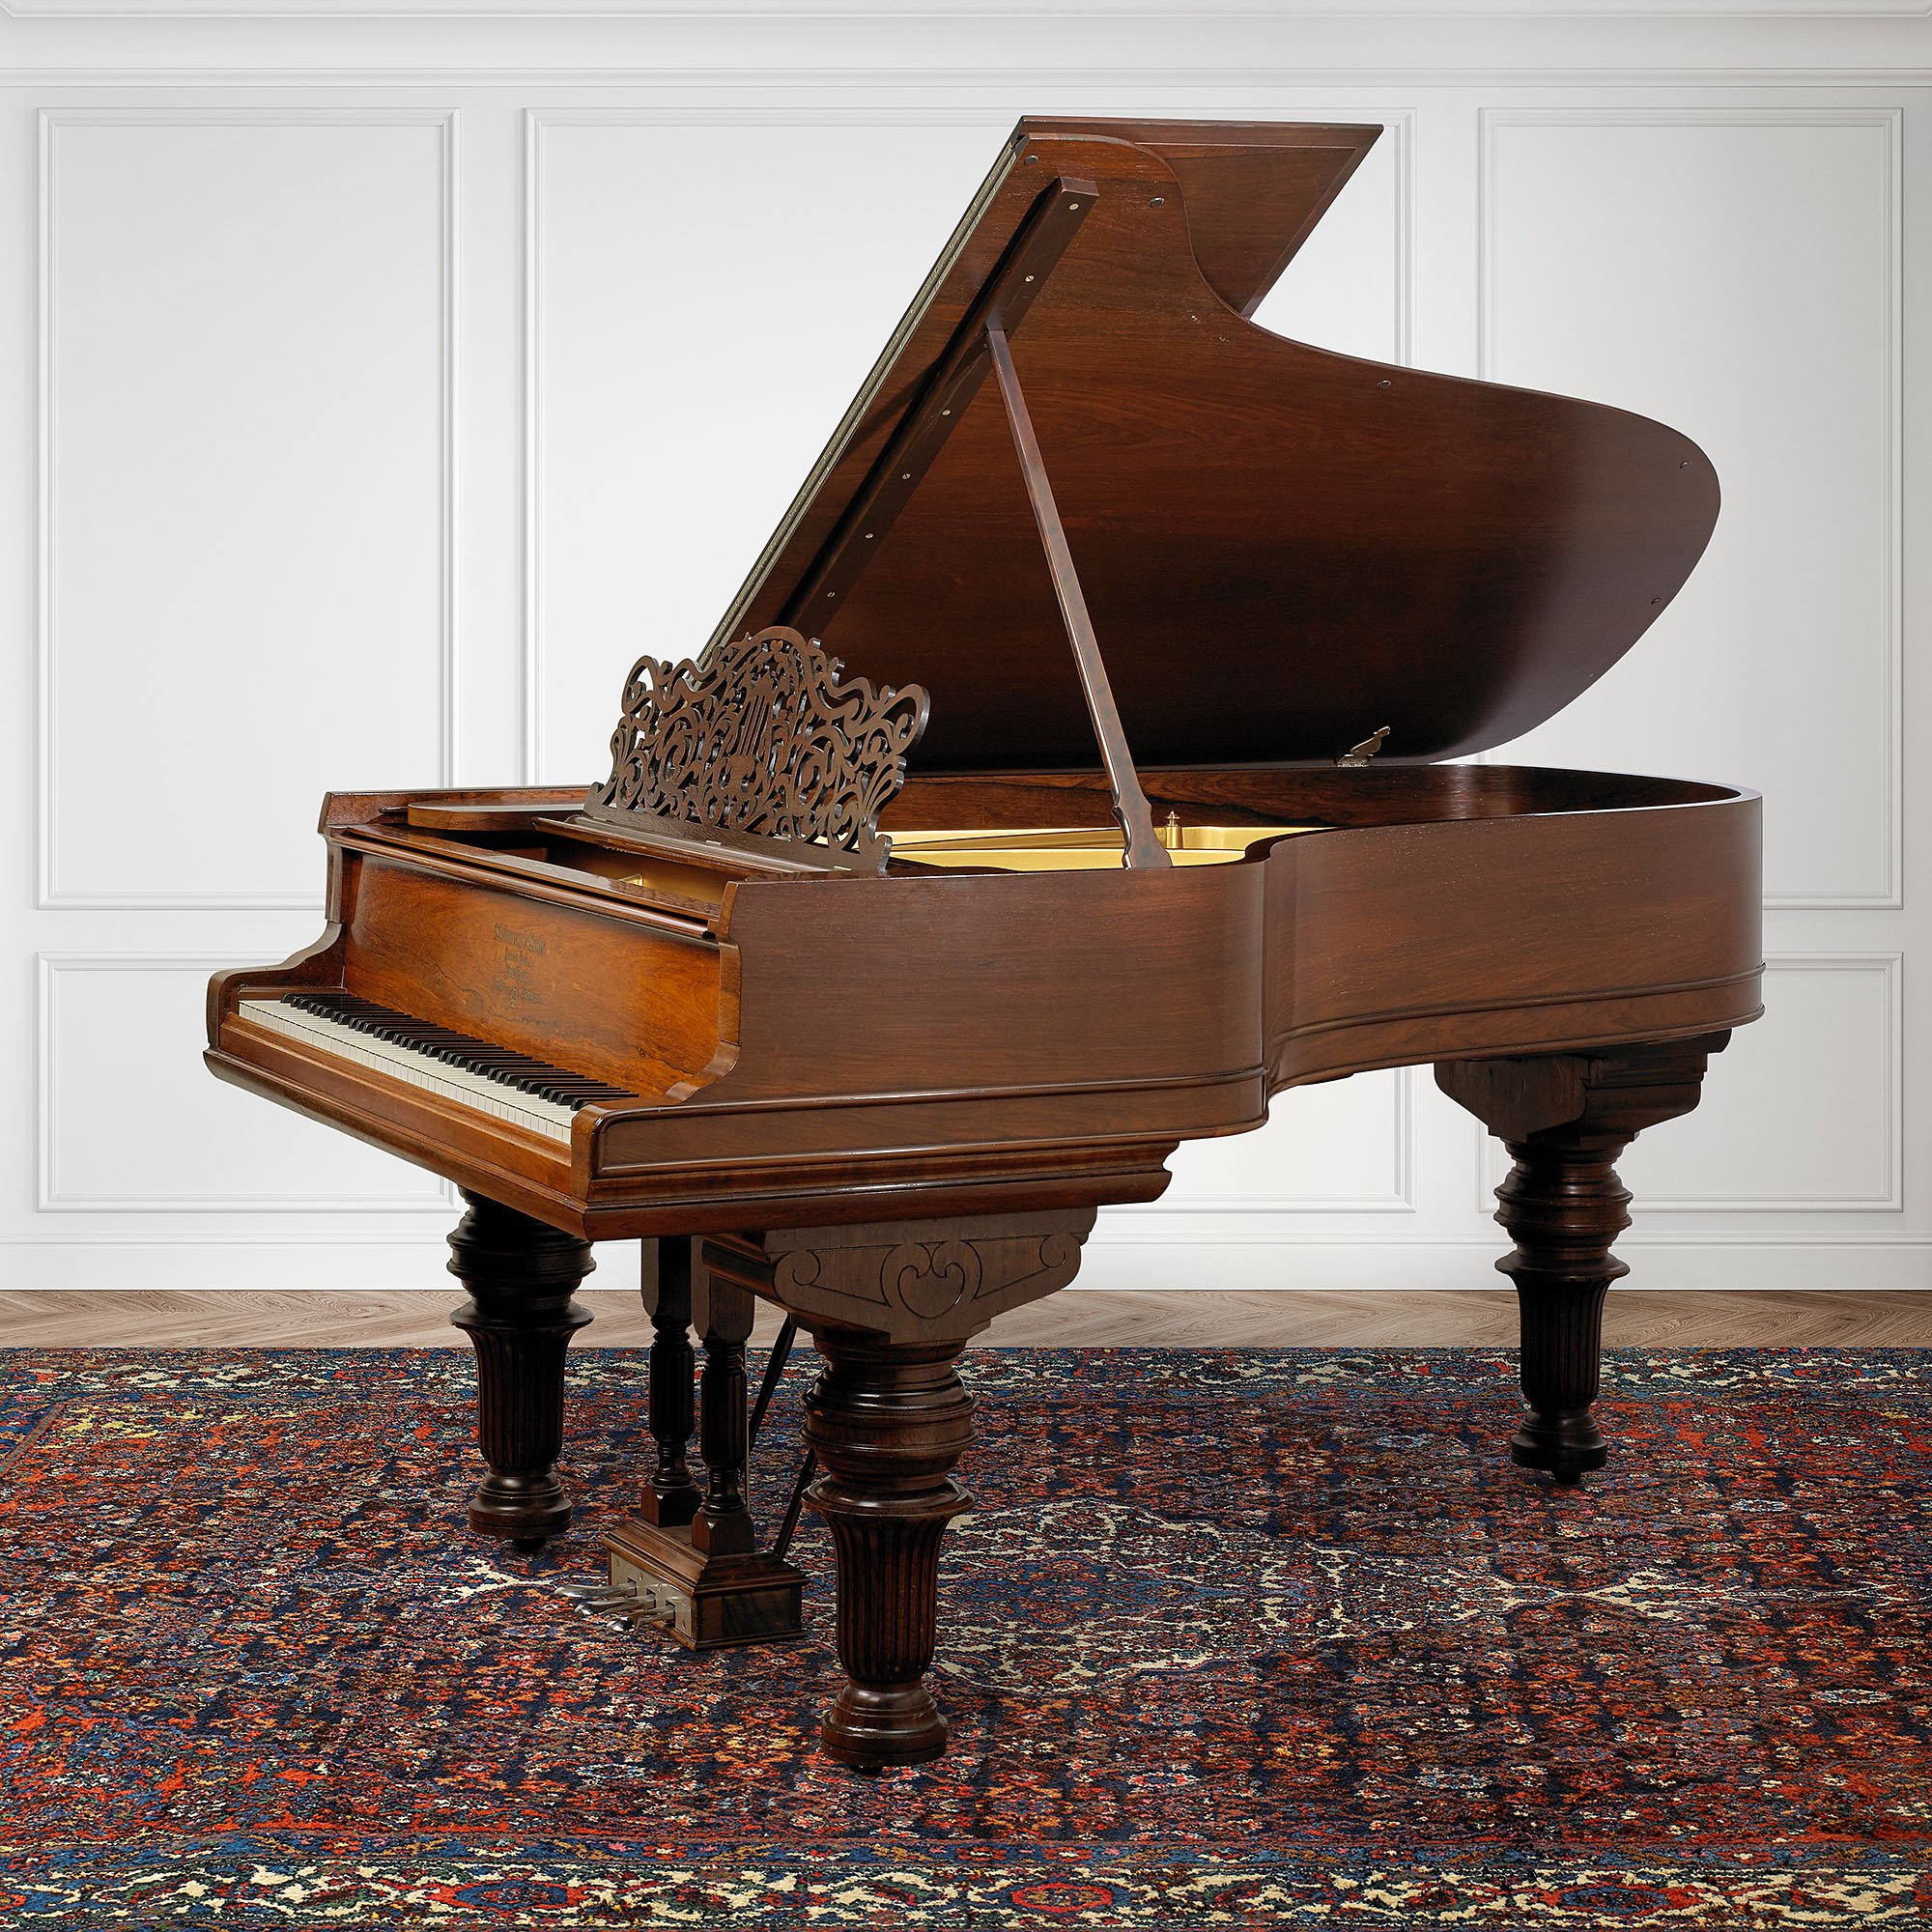 All Used Pianos — Piedmont Piano Company